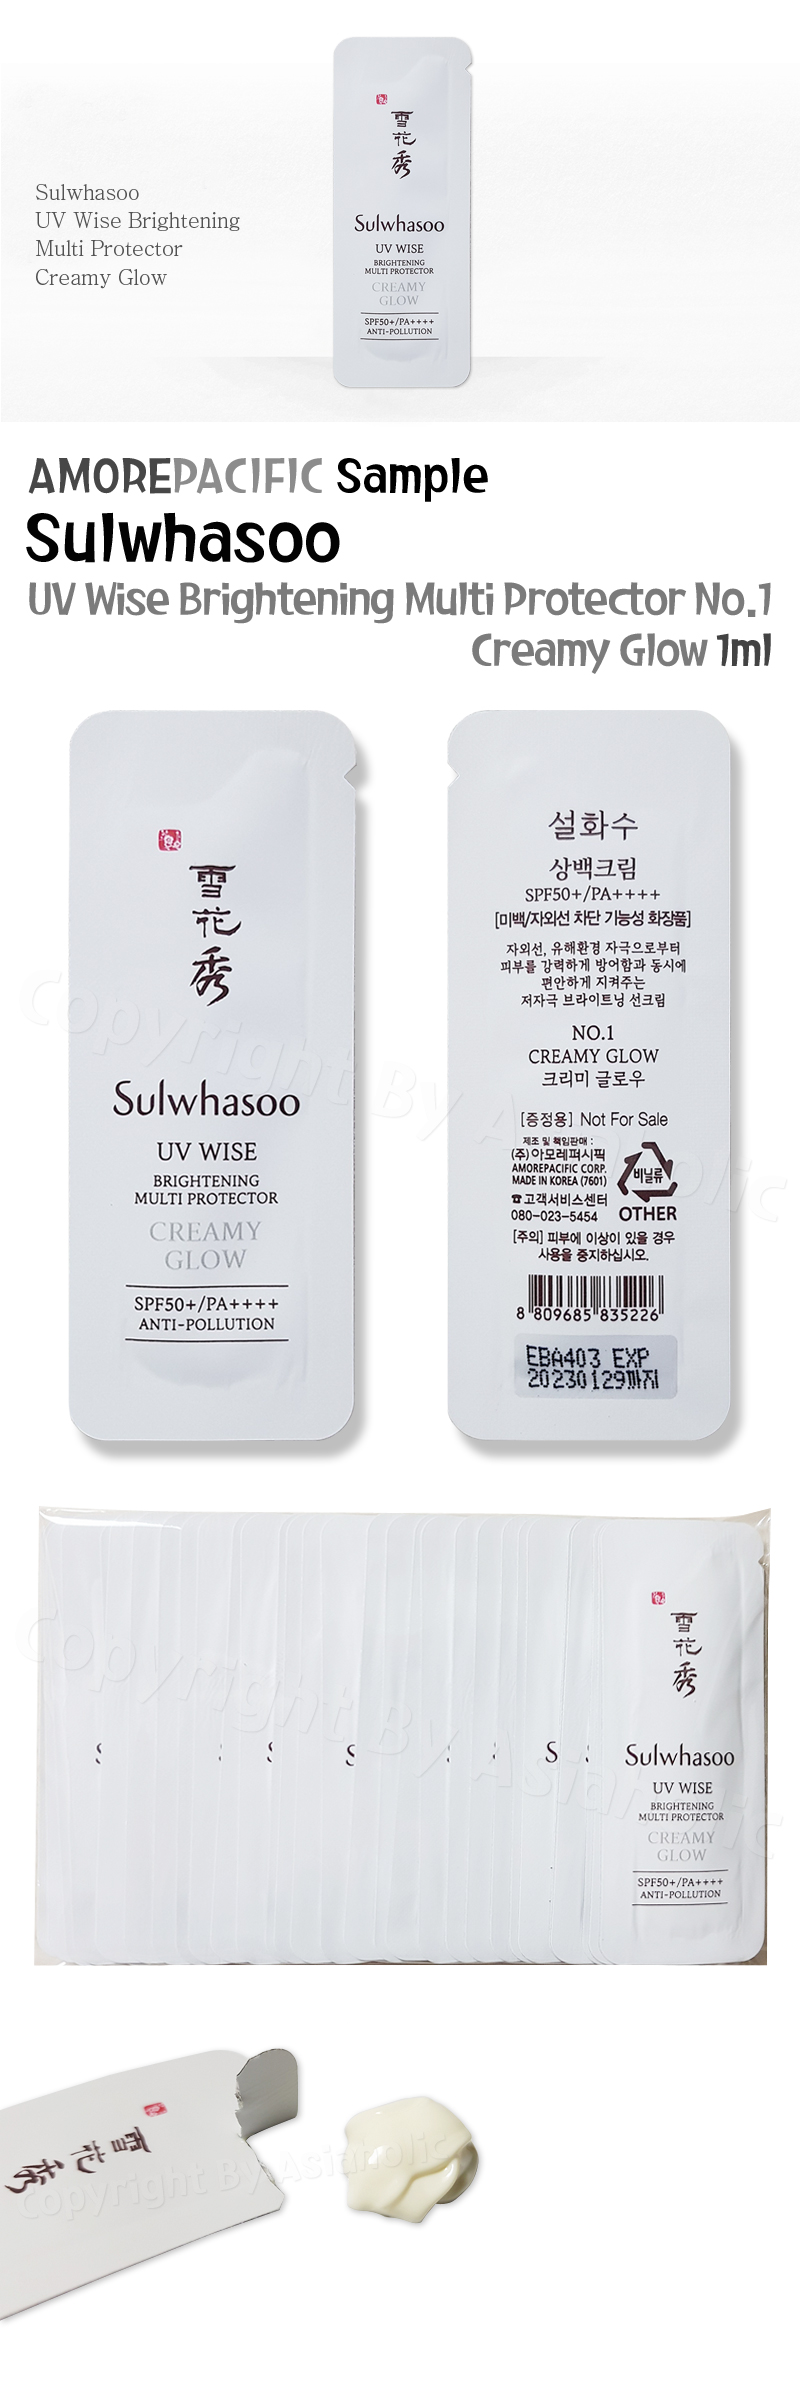 Sulwhasoo UV Wise Brightening Multi Protector No.1 Creamy Glow 1ml (10pcs~130pcs) Sample Newest Version